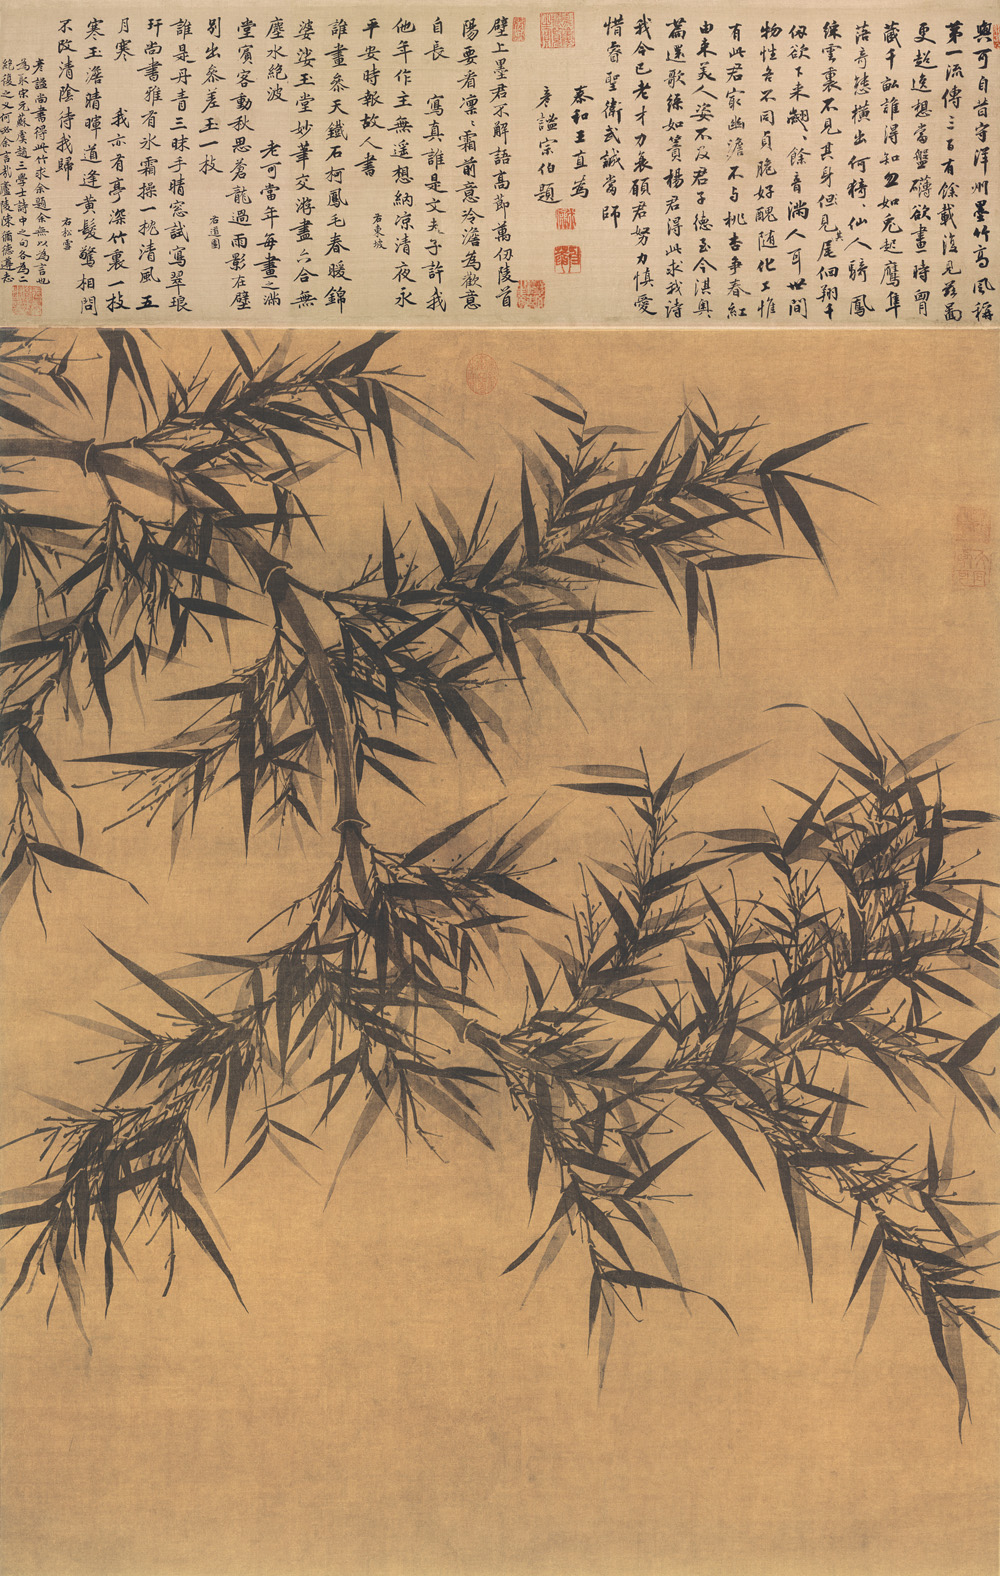 Wen Tong: Bamboo in Ink